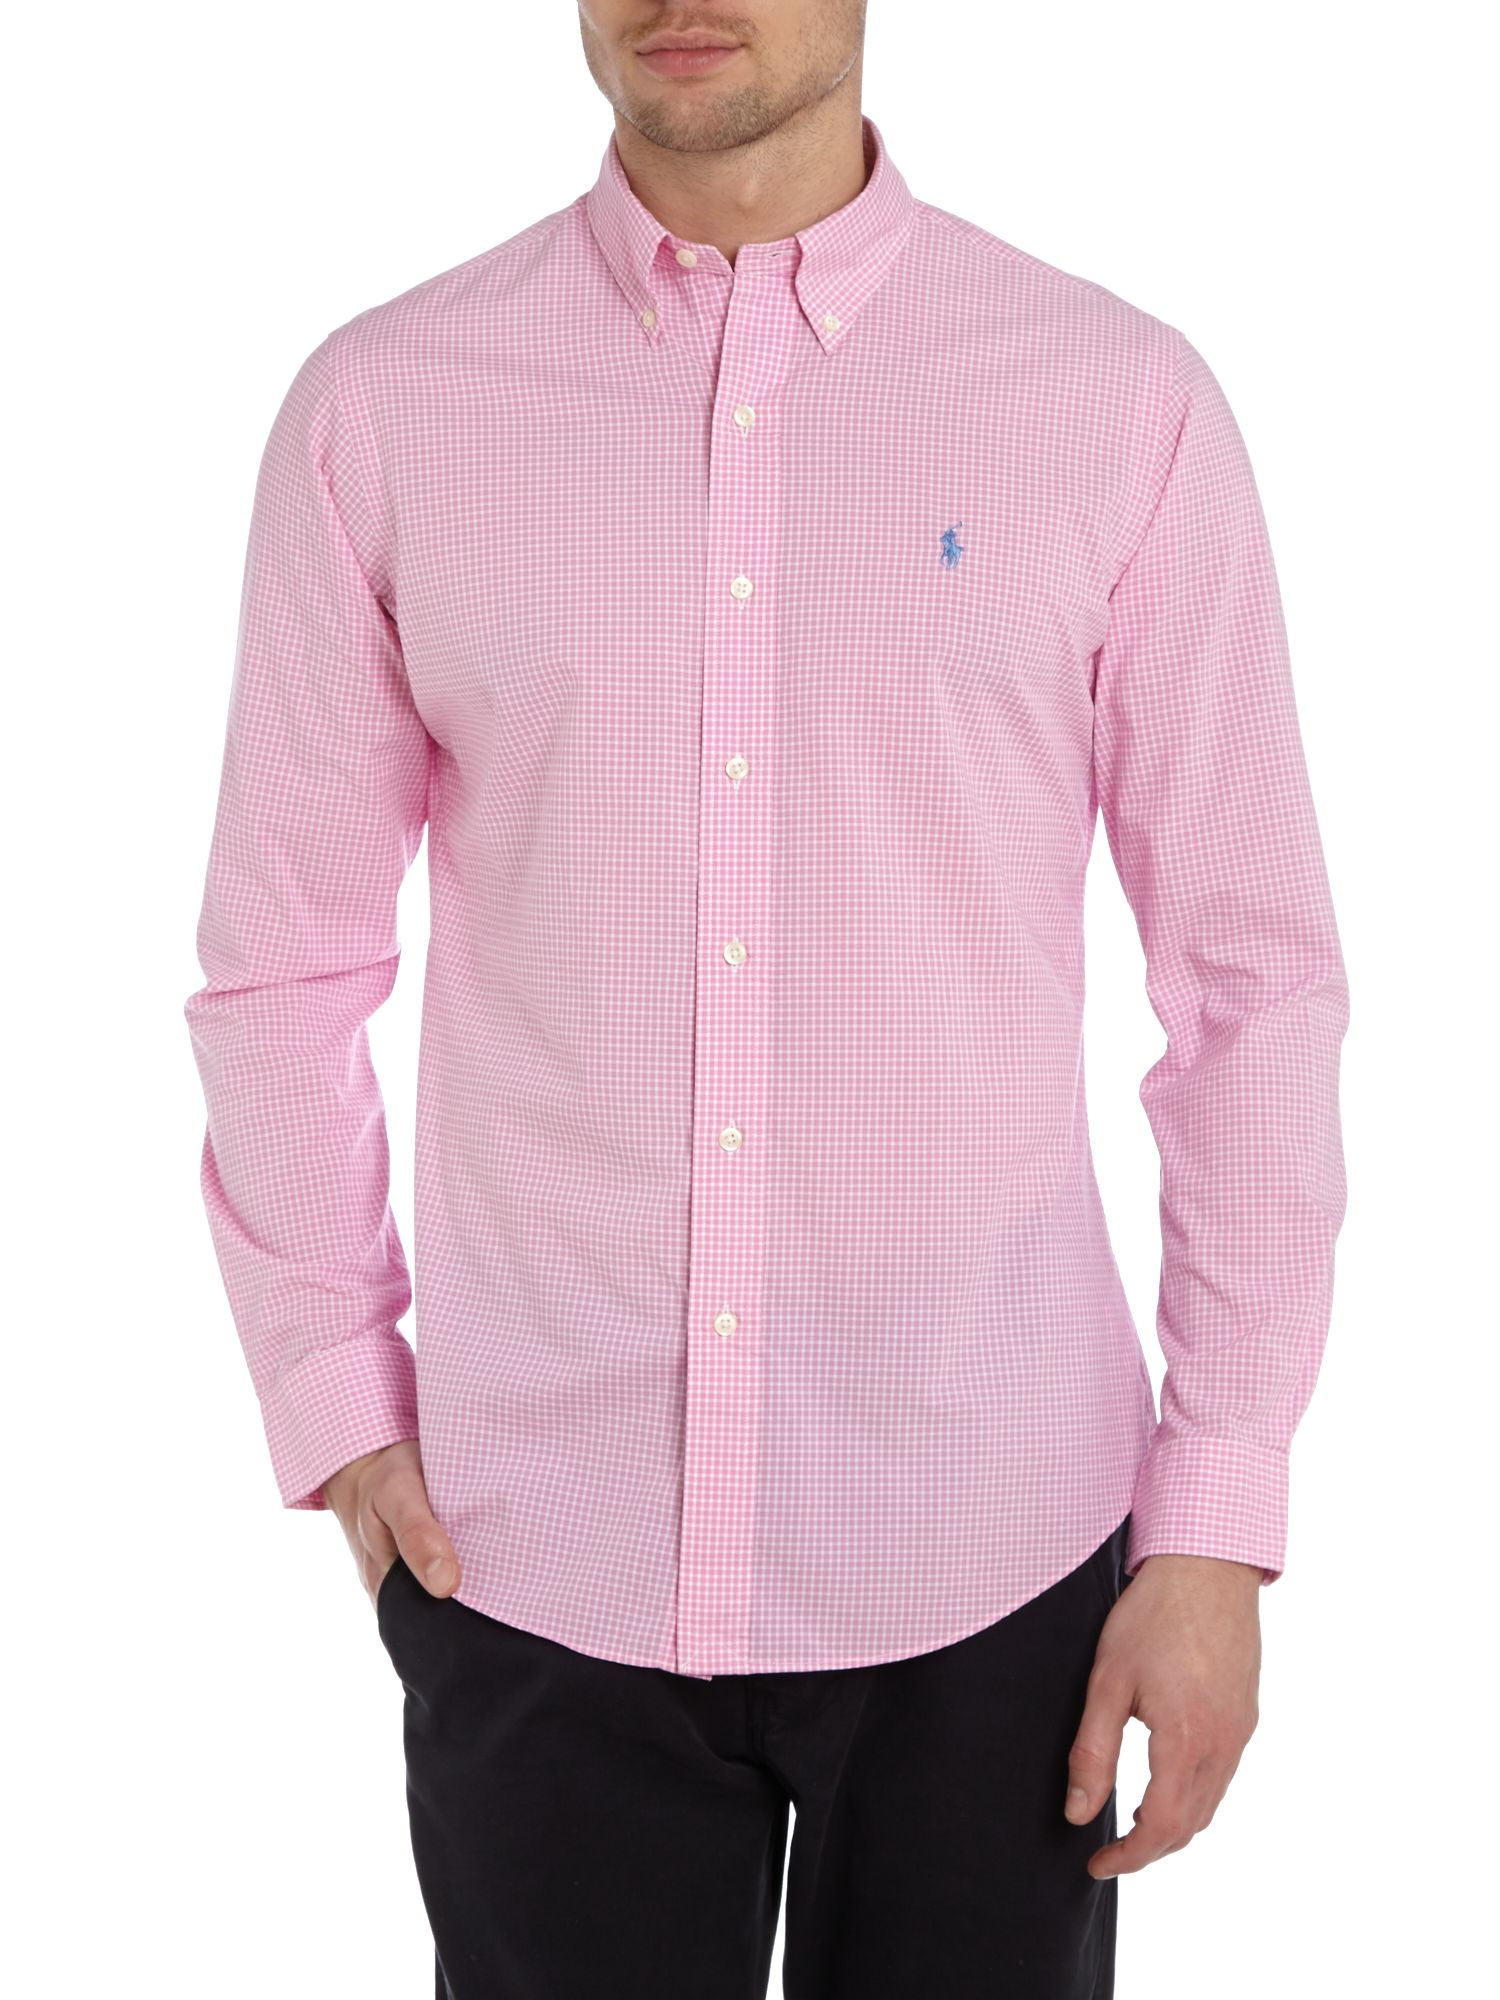 Polo ralph lauren Long Sleeve Mini Gingham Check Shirt in Pink for Men ...